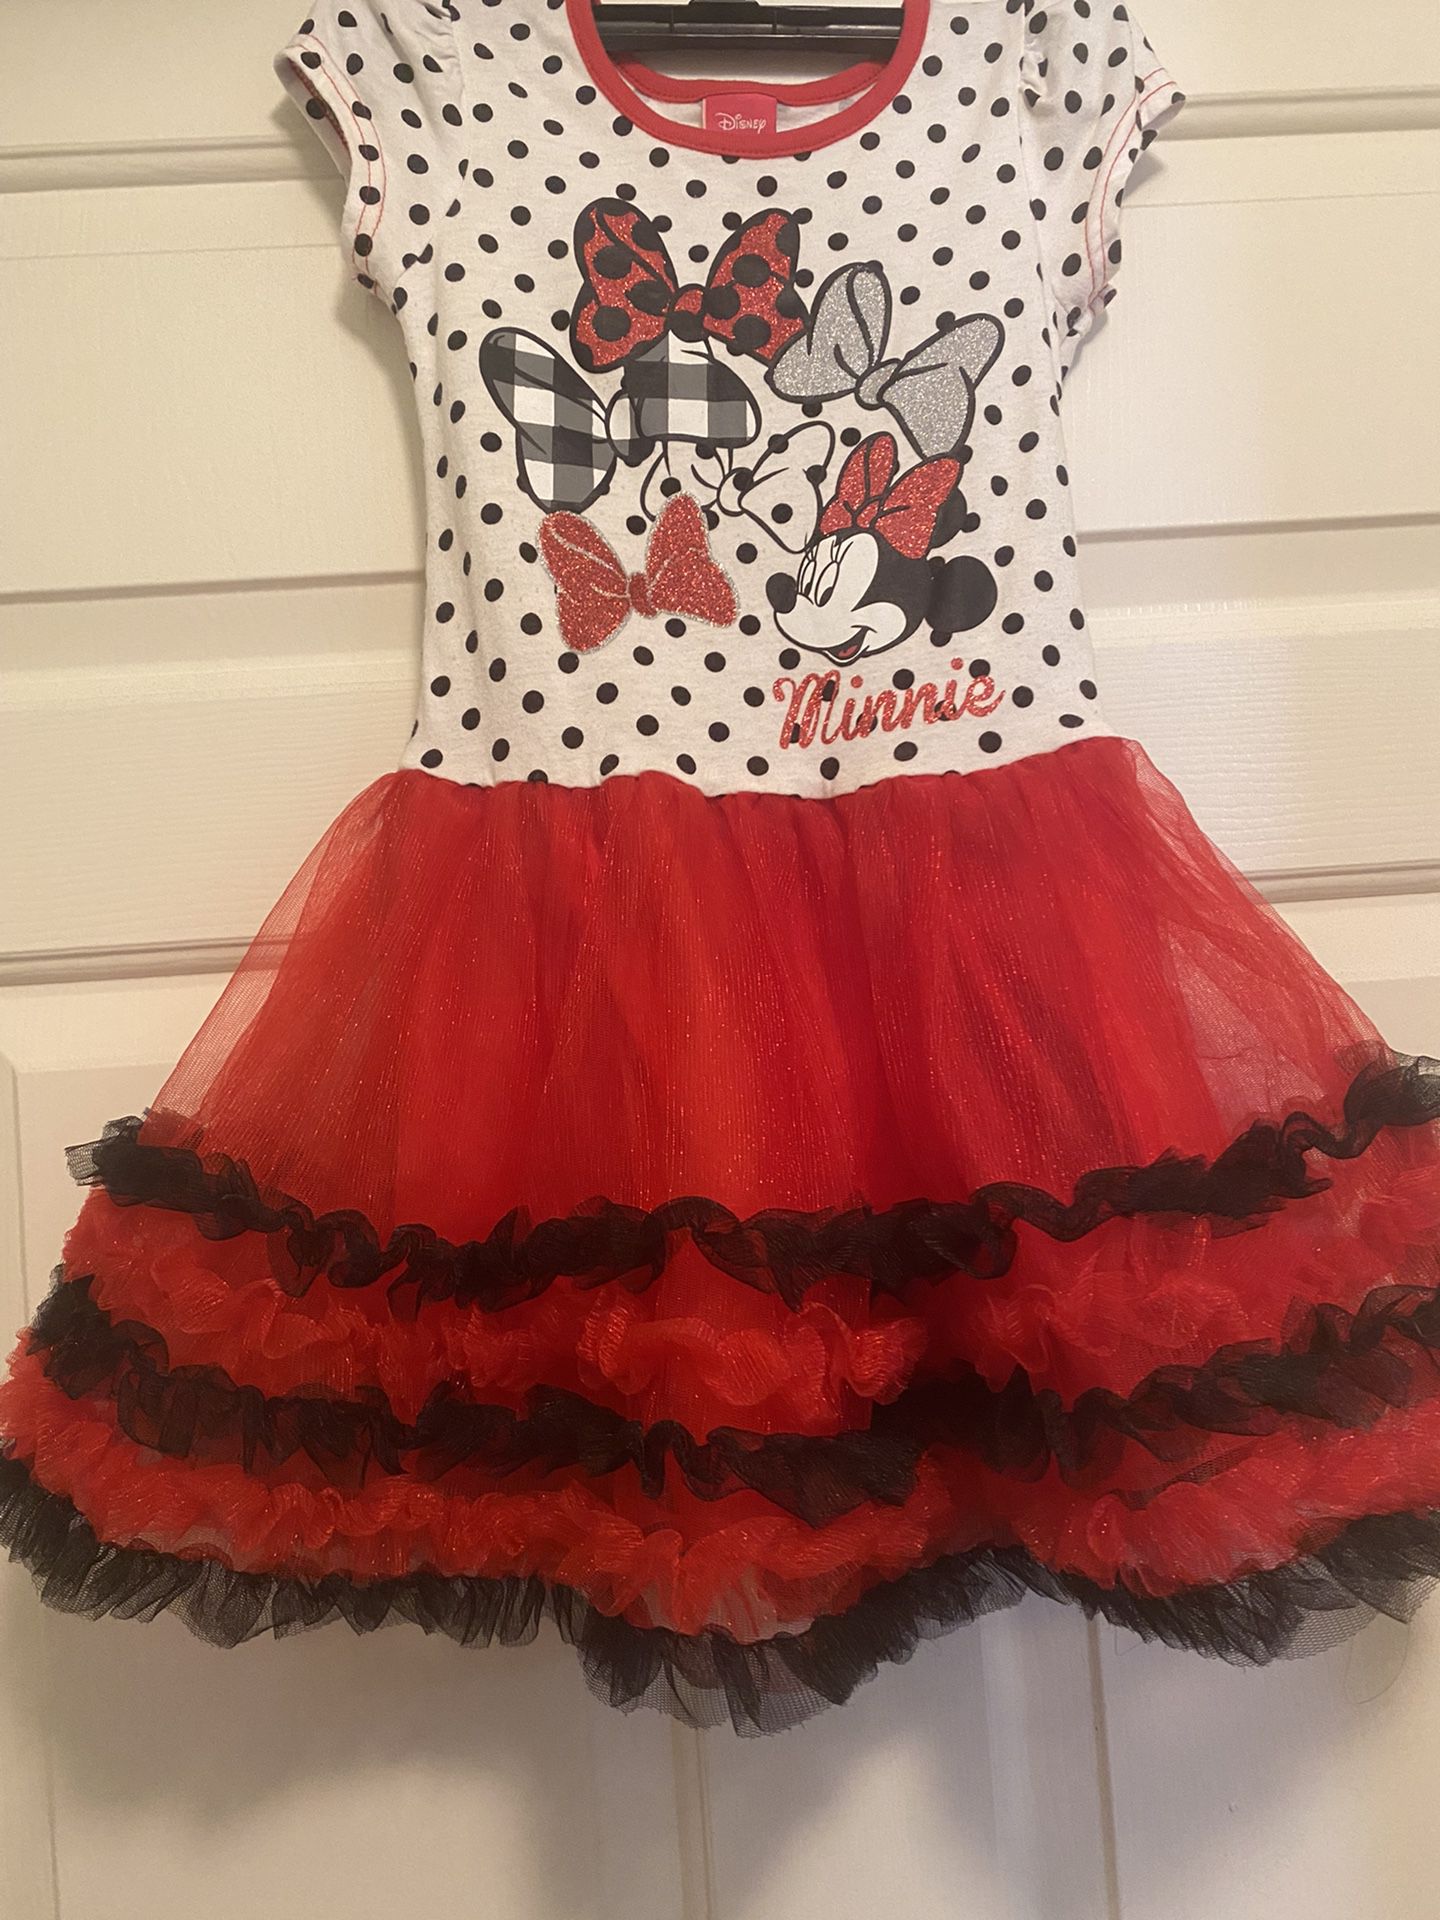 Disney Minnie Mouse Girls’ Red & Black Tutu Skirt Dress Size 5